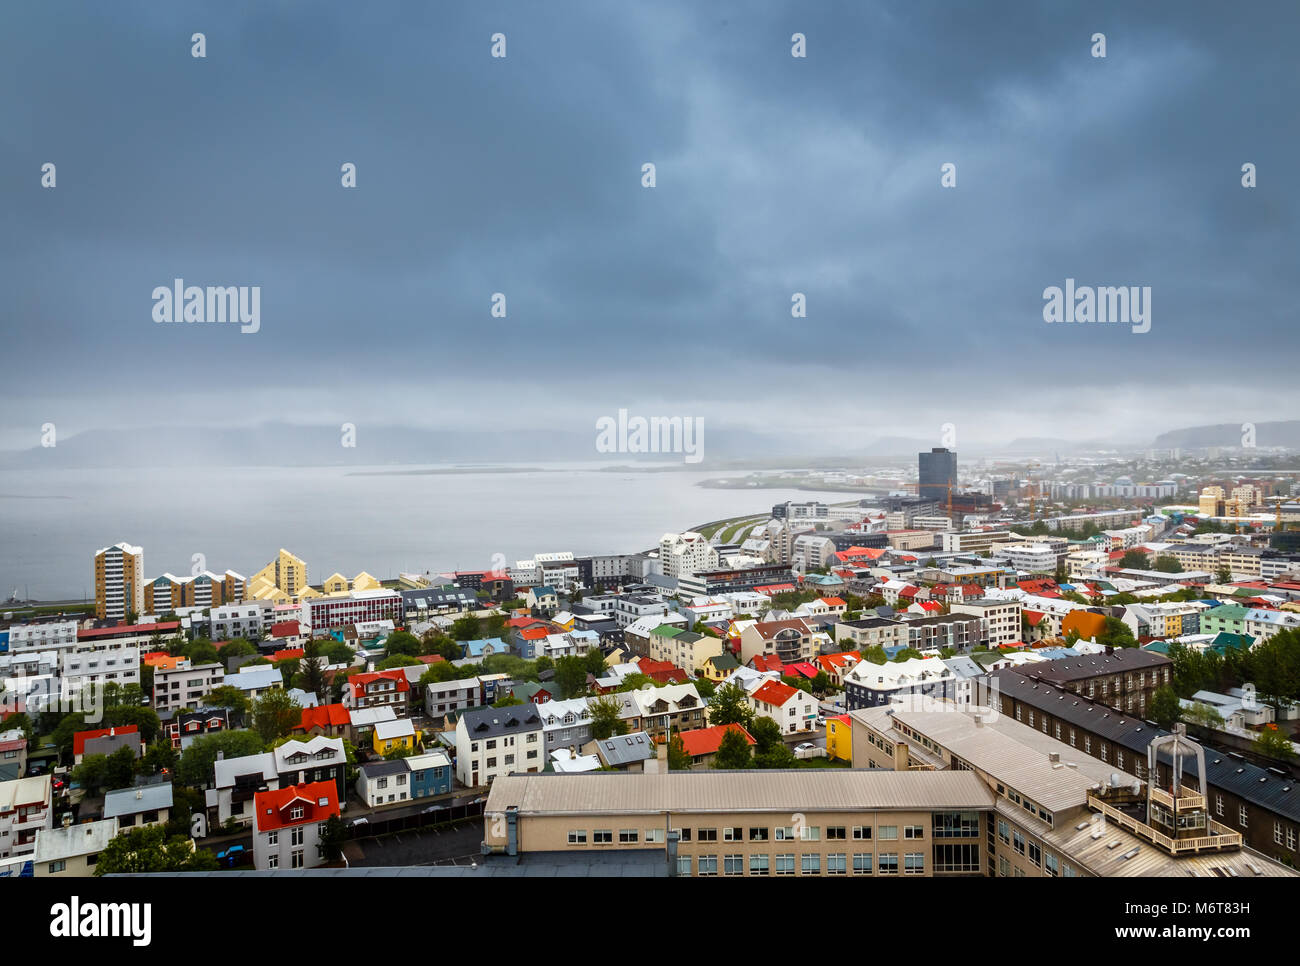 Capitale islandese panorama, strade e colorati edifici resedential con ocean fjord in background, Reykjavik, Islanda Foto Stock